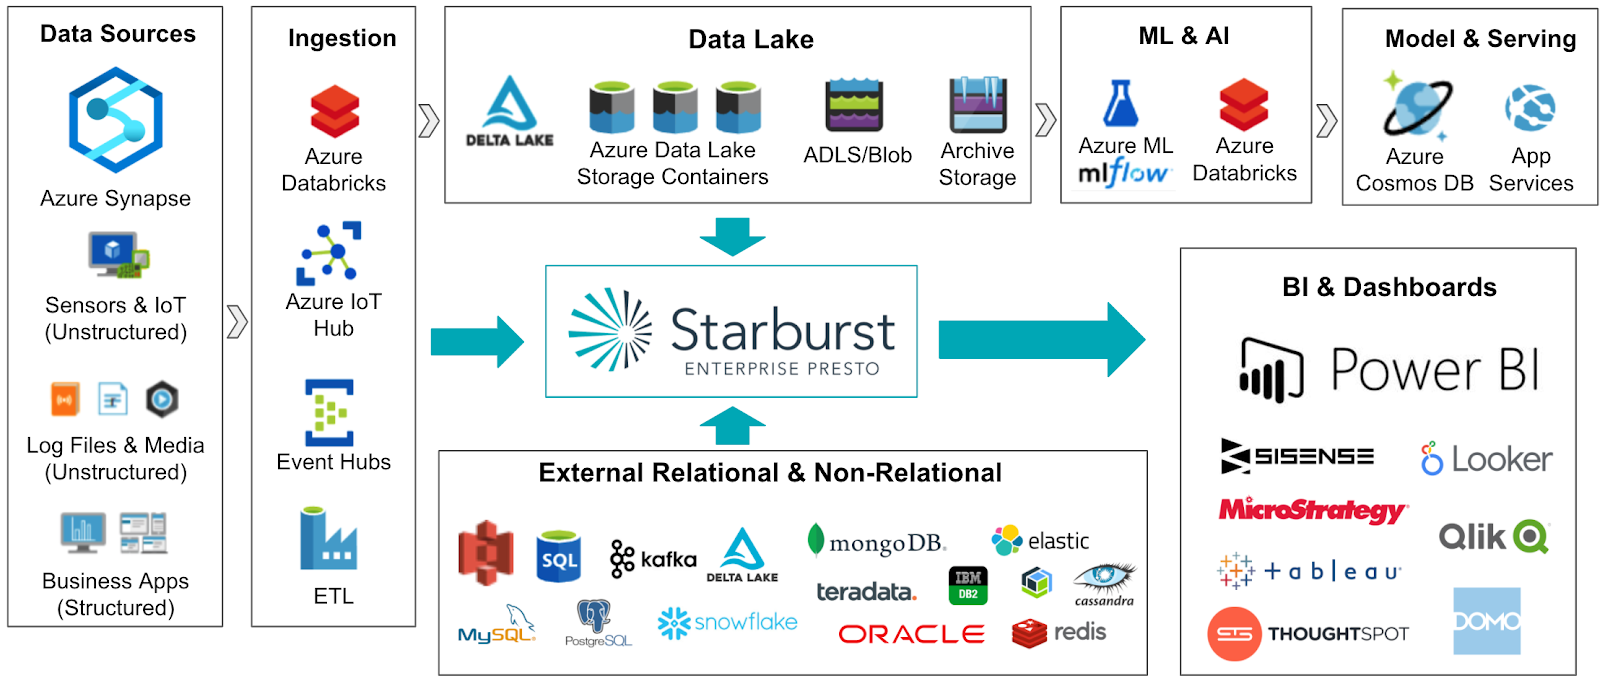 Starburst Enterprise for Presto - Azure Architecture